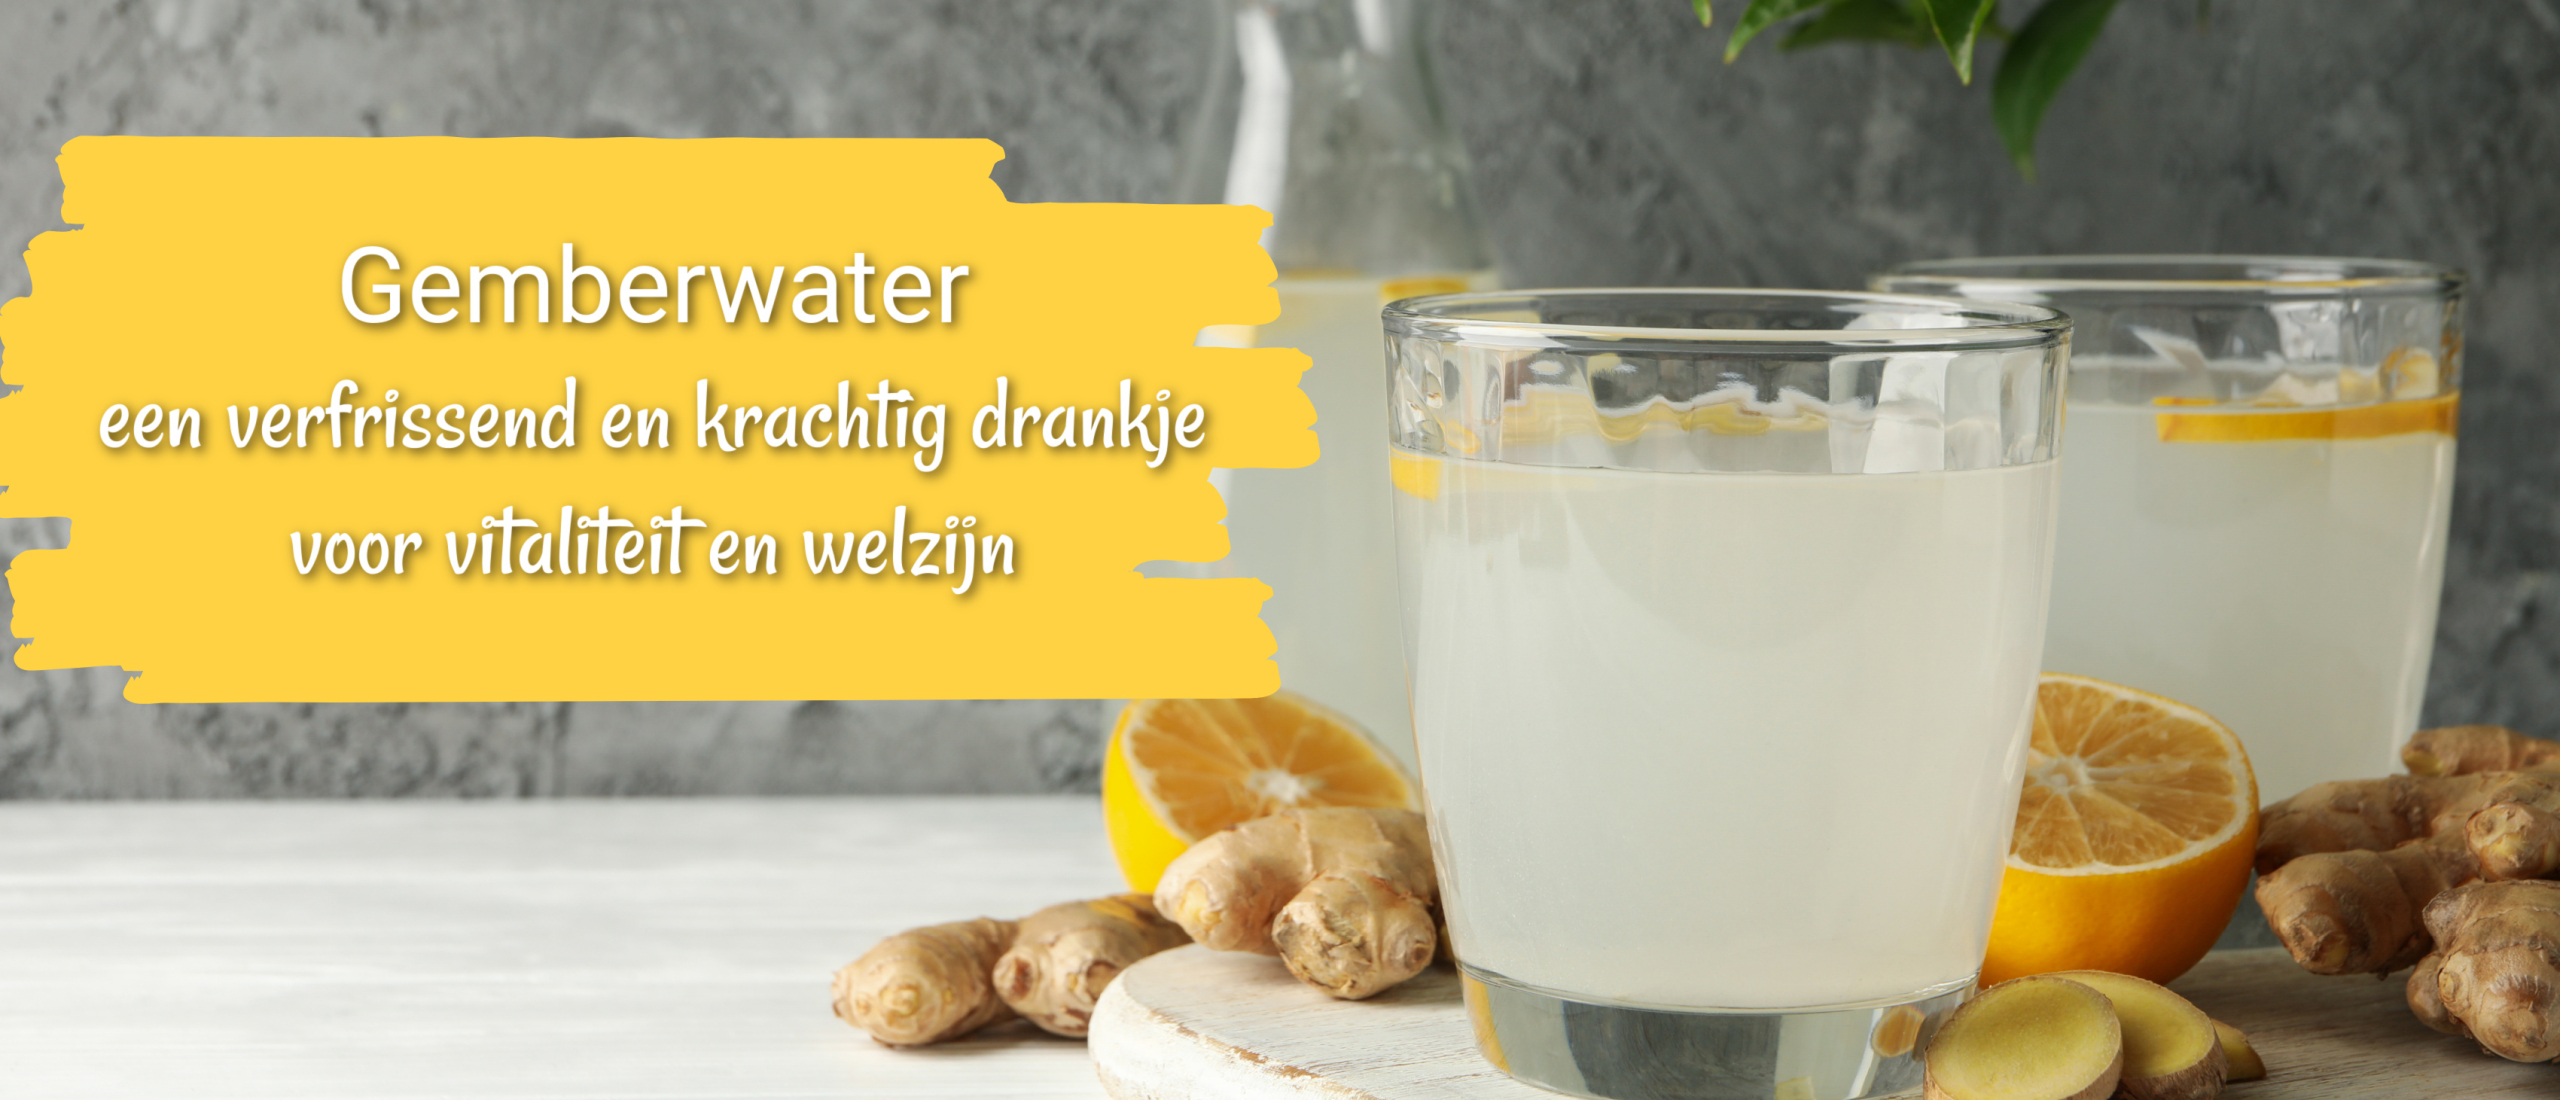 Gemberwater, verfrissend en krachtig voor je vitaliteit.